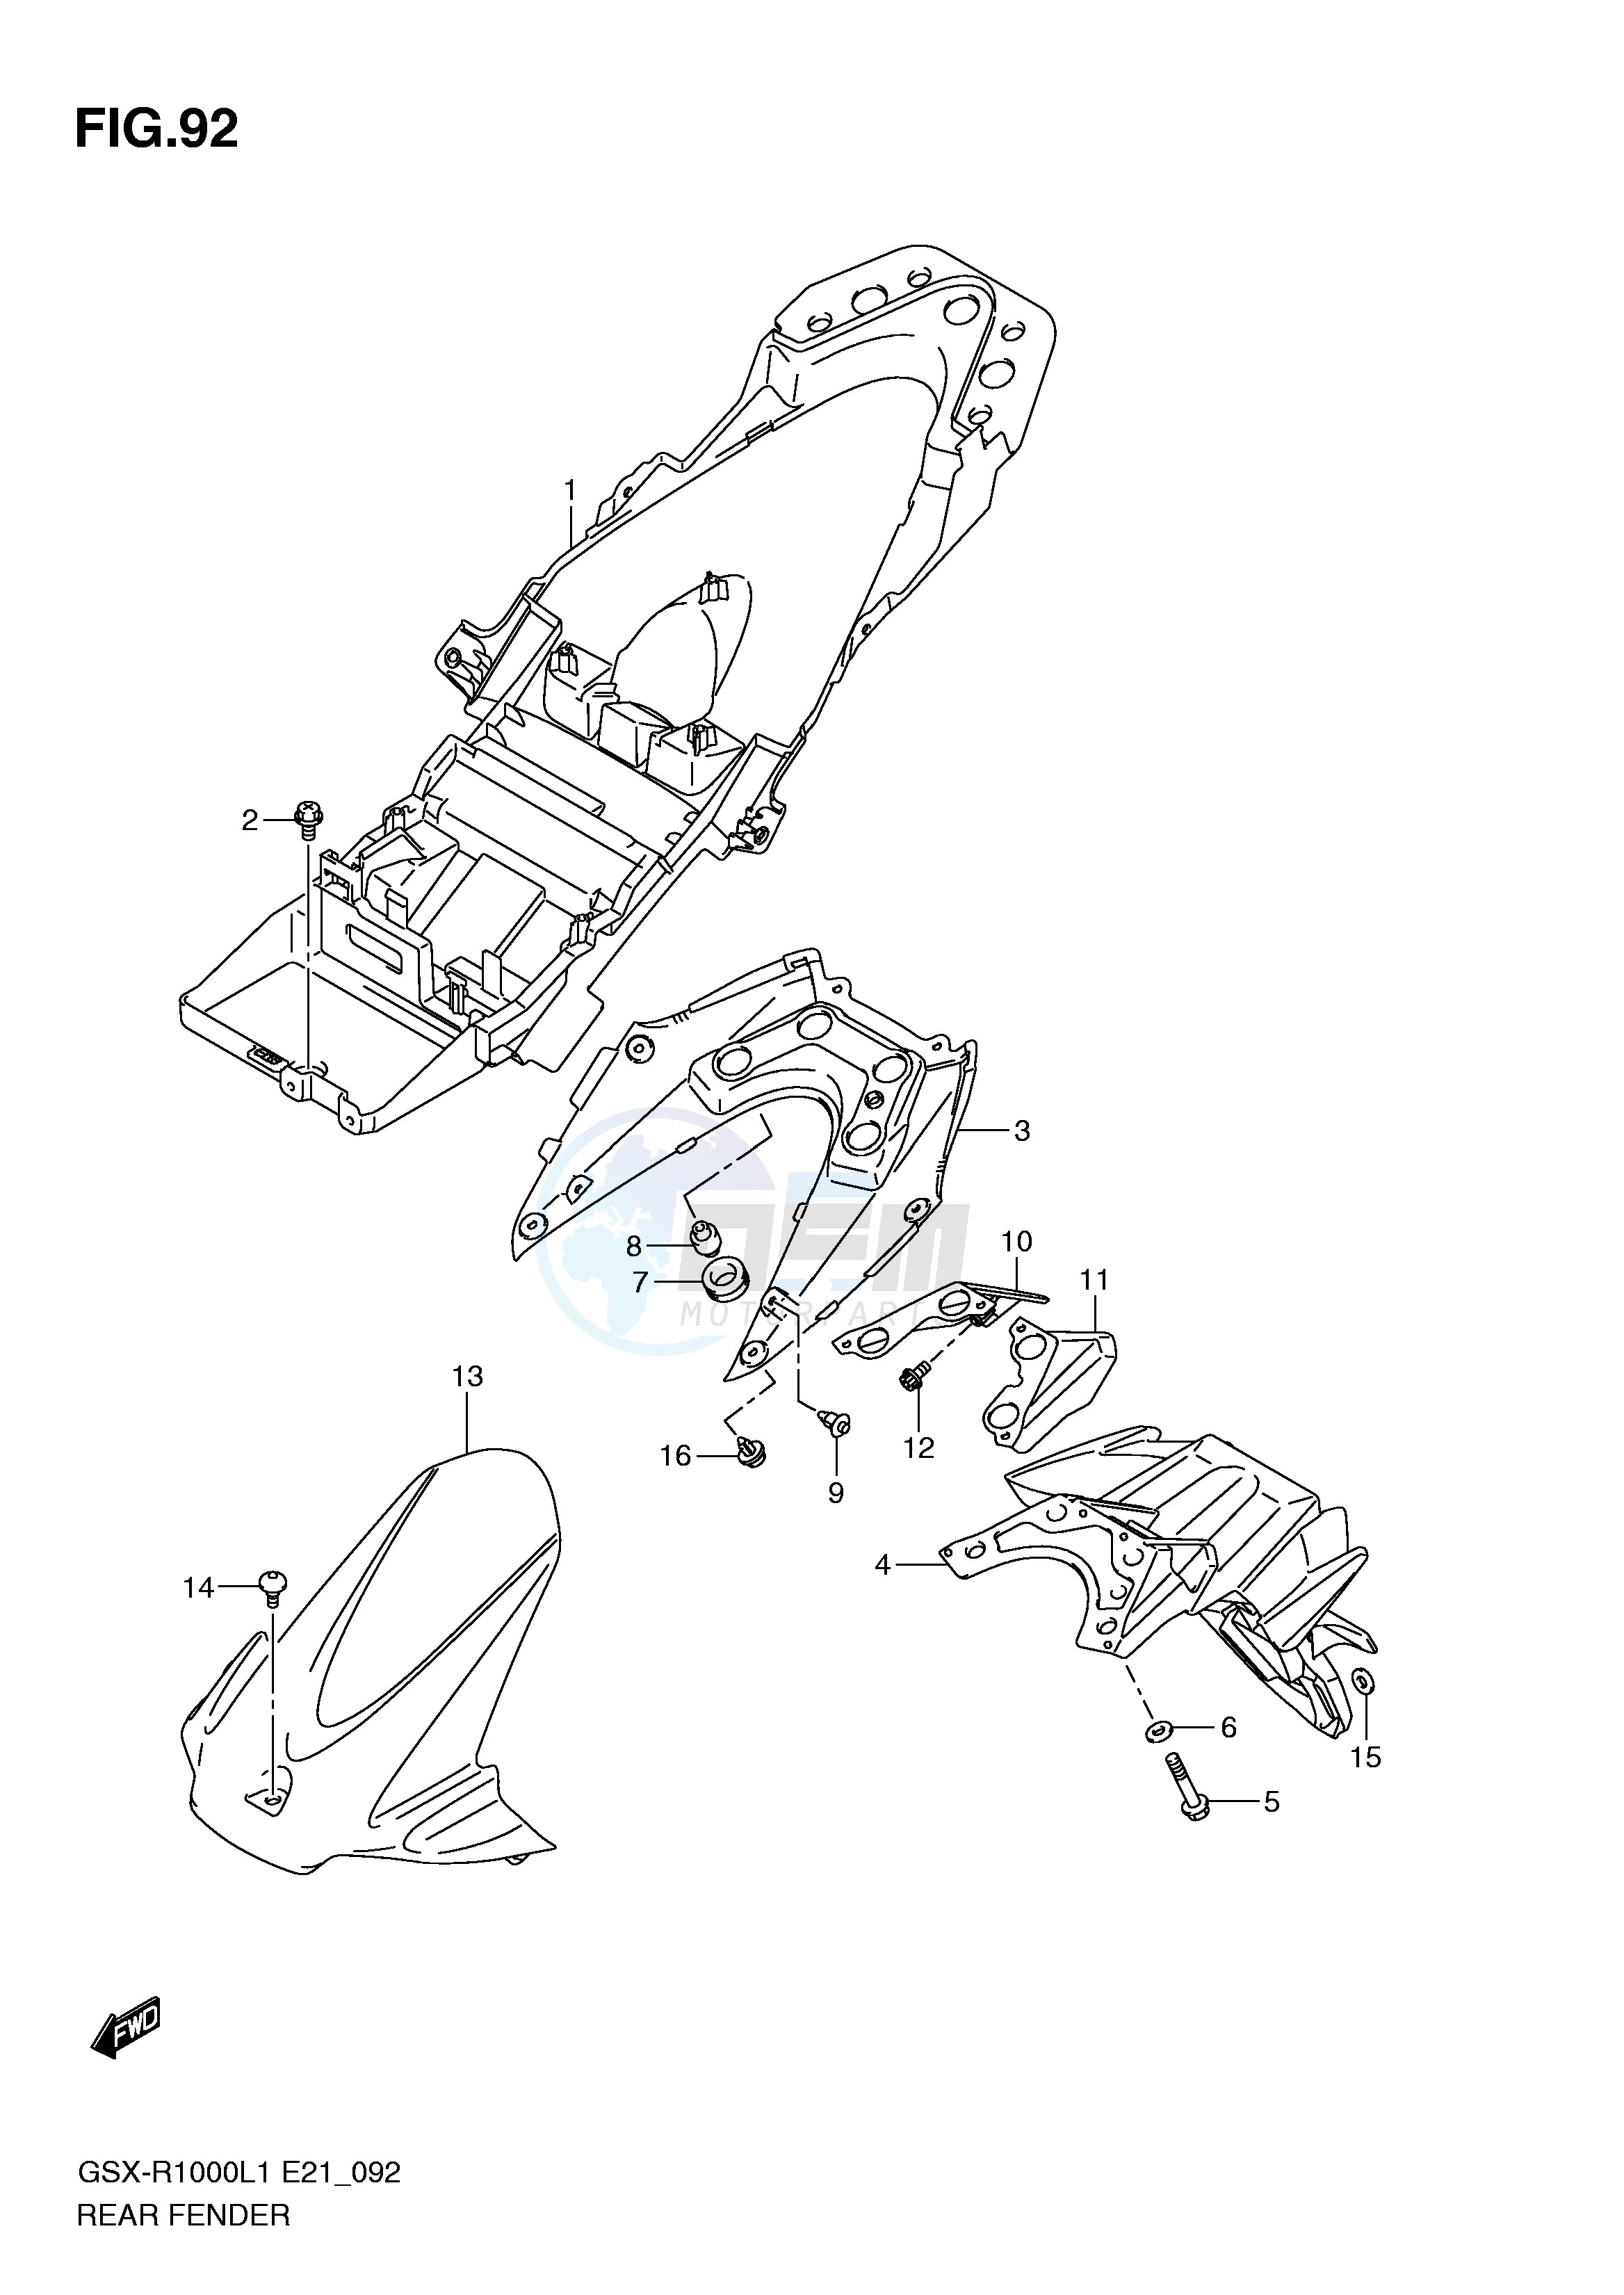 REAR FENDER (GSX-R1000L1 E51) blueprint